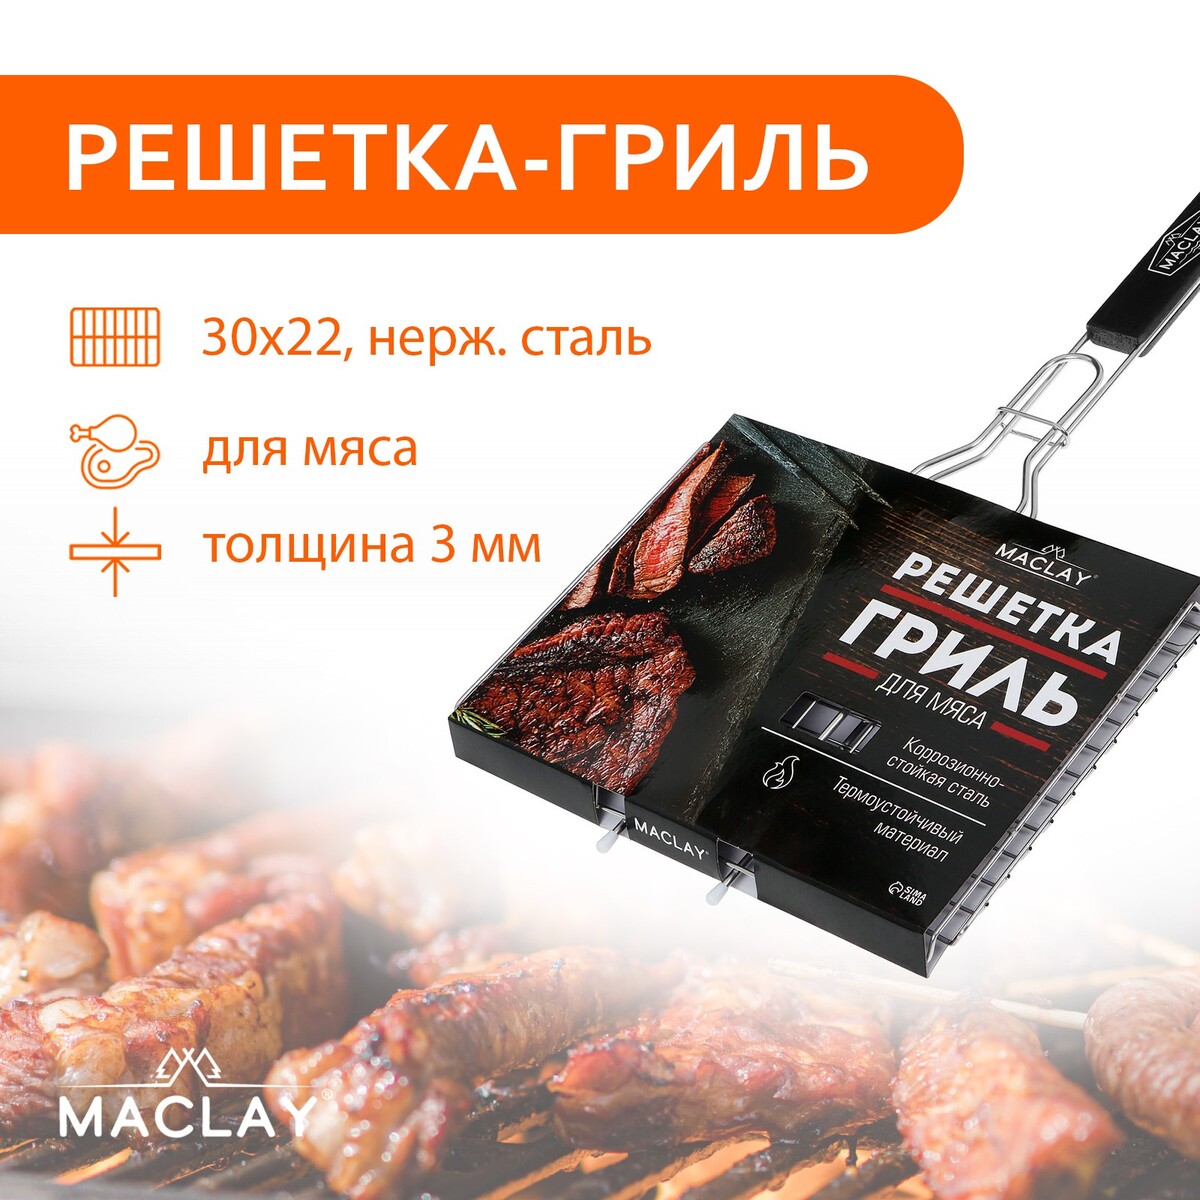 Решетка гриль maclay premium, 50х30х22 см, для мяса, нержавеющая сталь